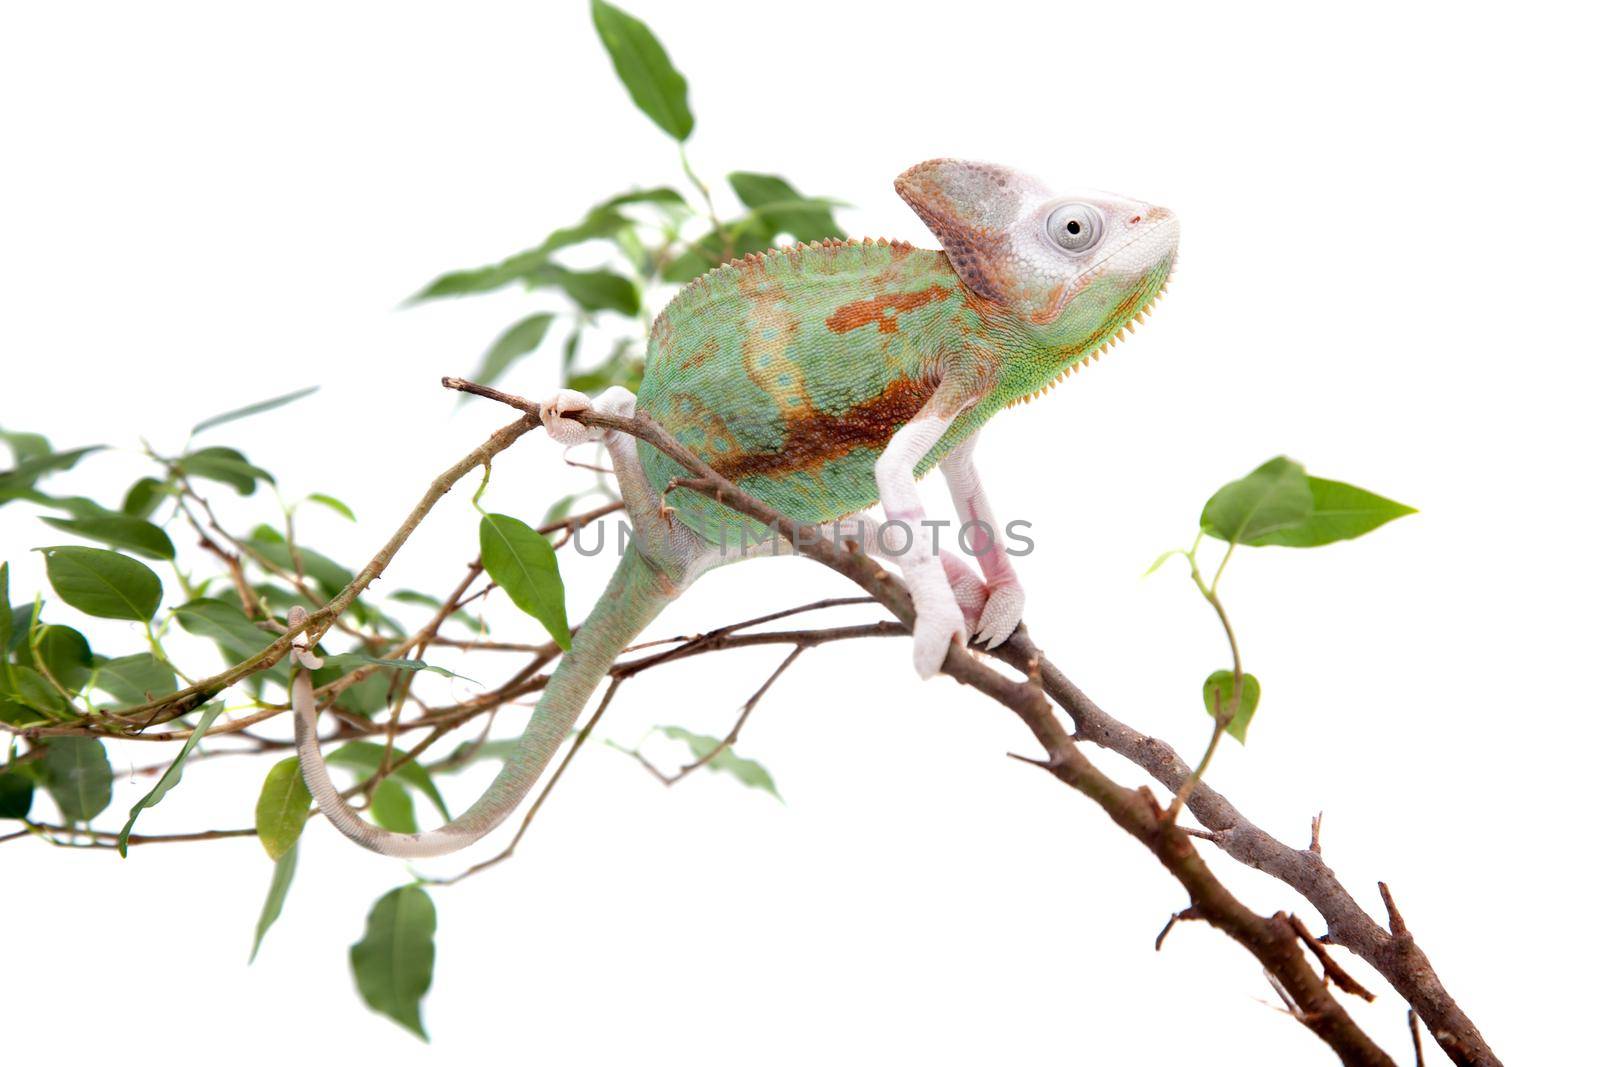 The veiled chameleon piebald, Chamaeleo calyptratus, male by RosaJay